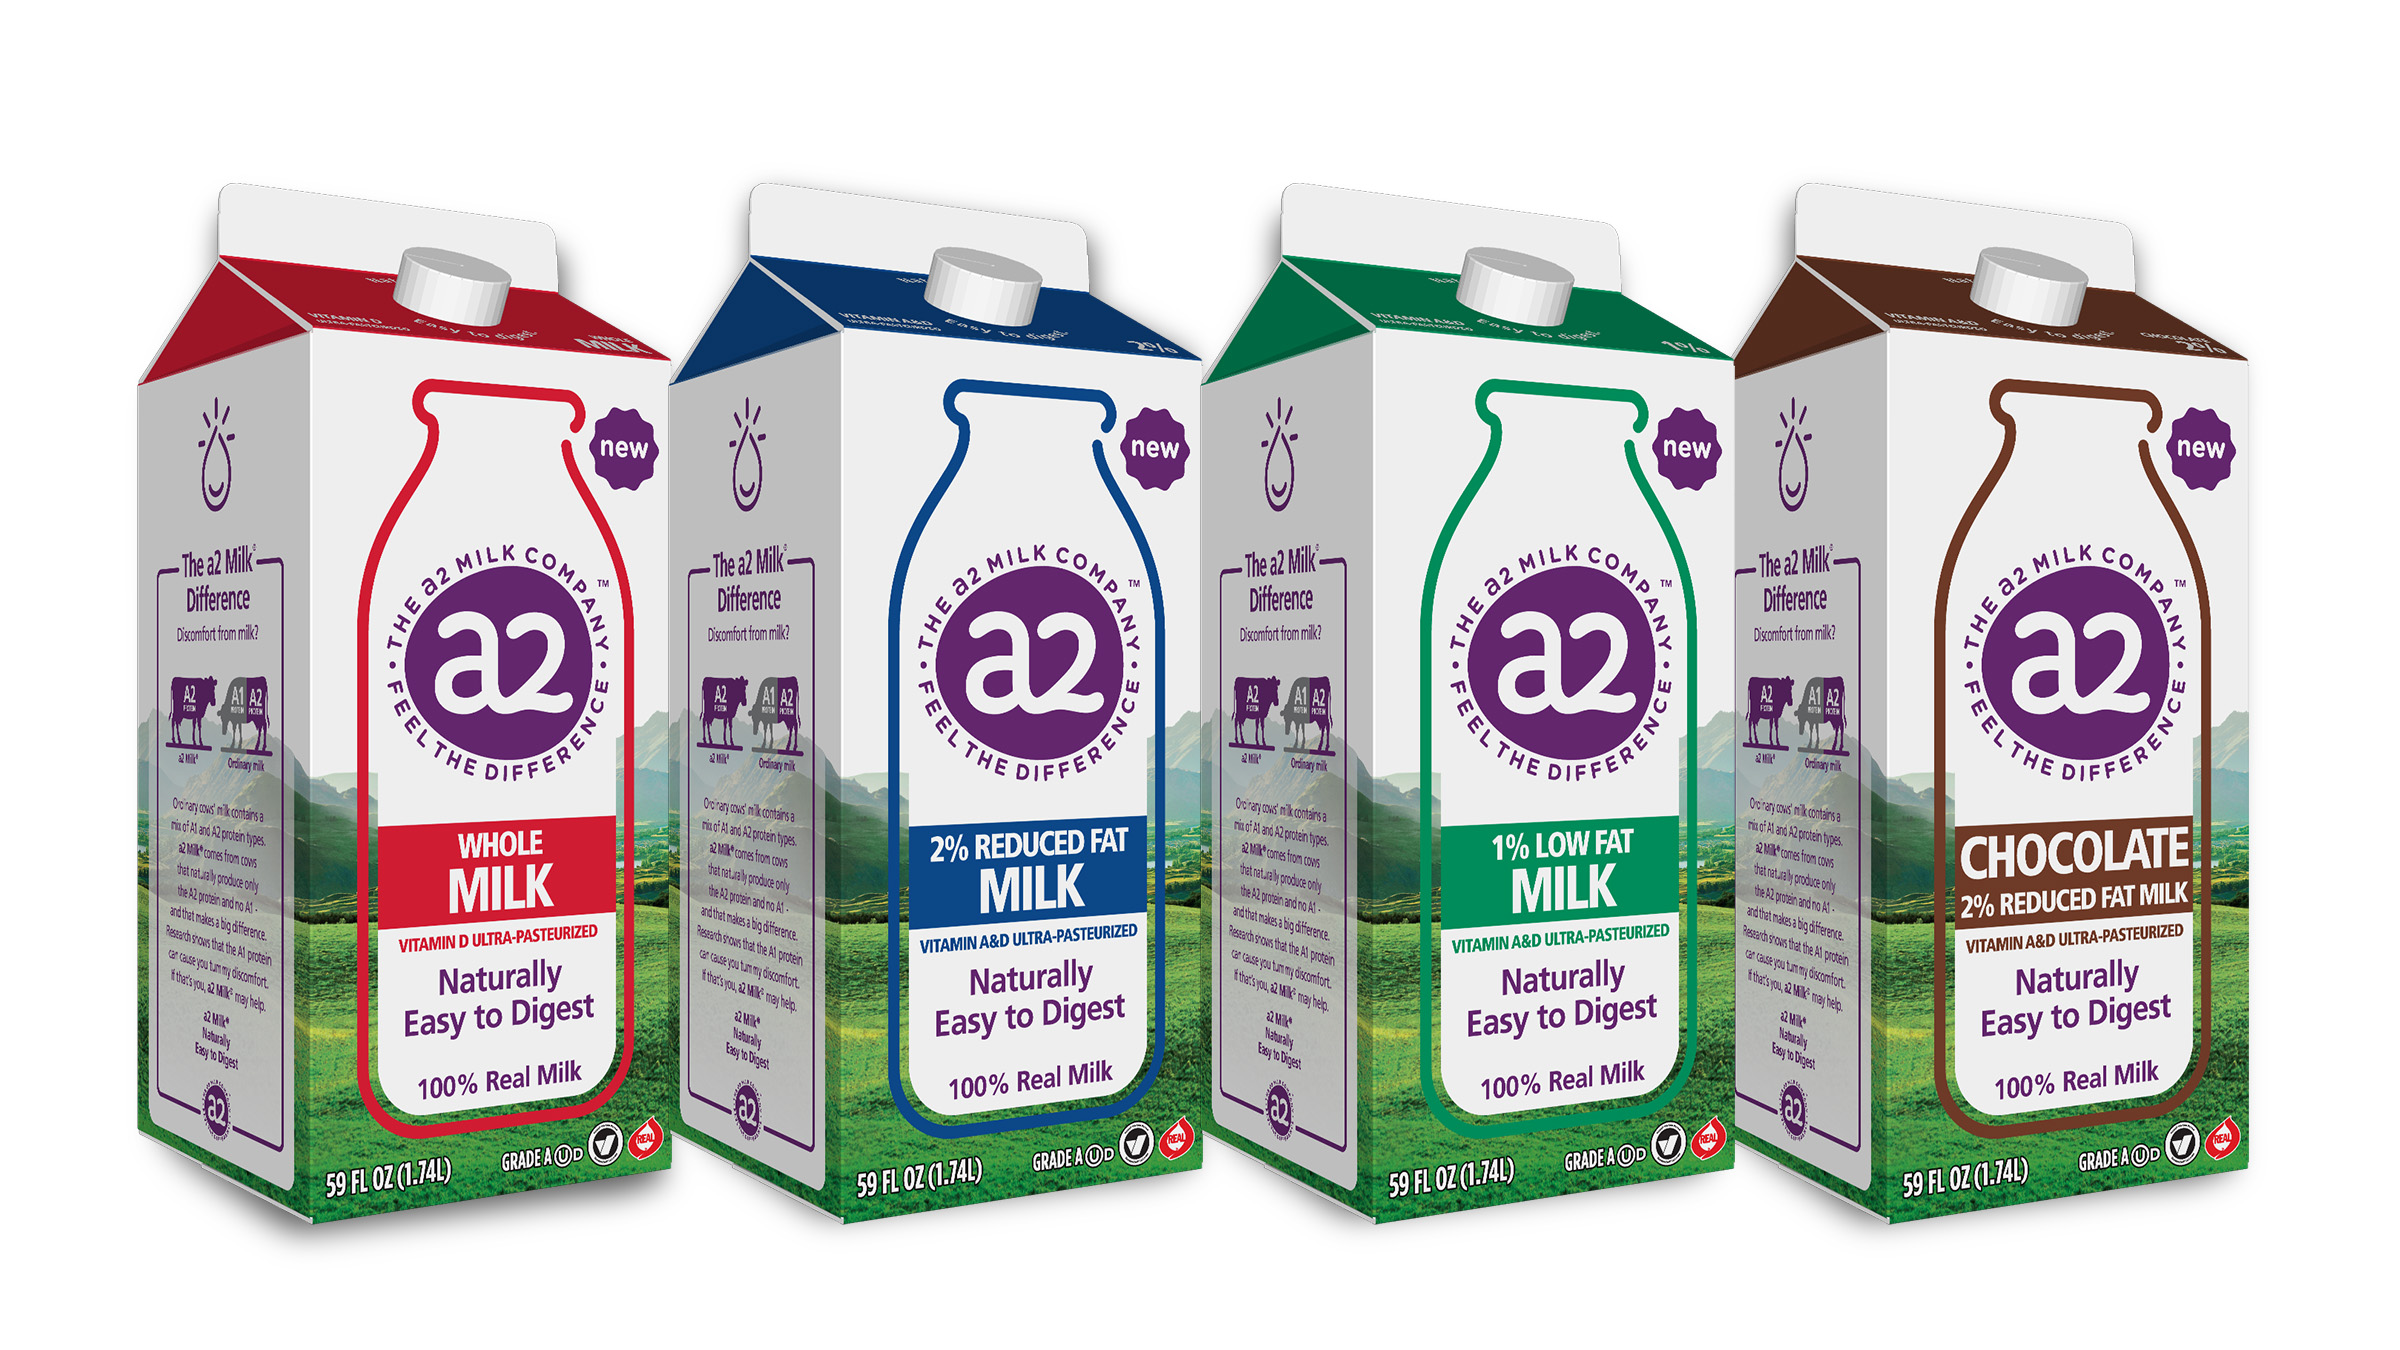 a2 Milk Company